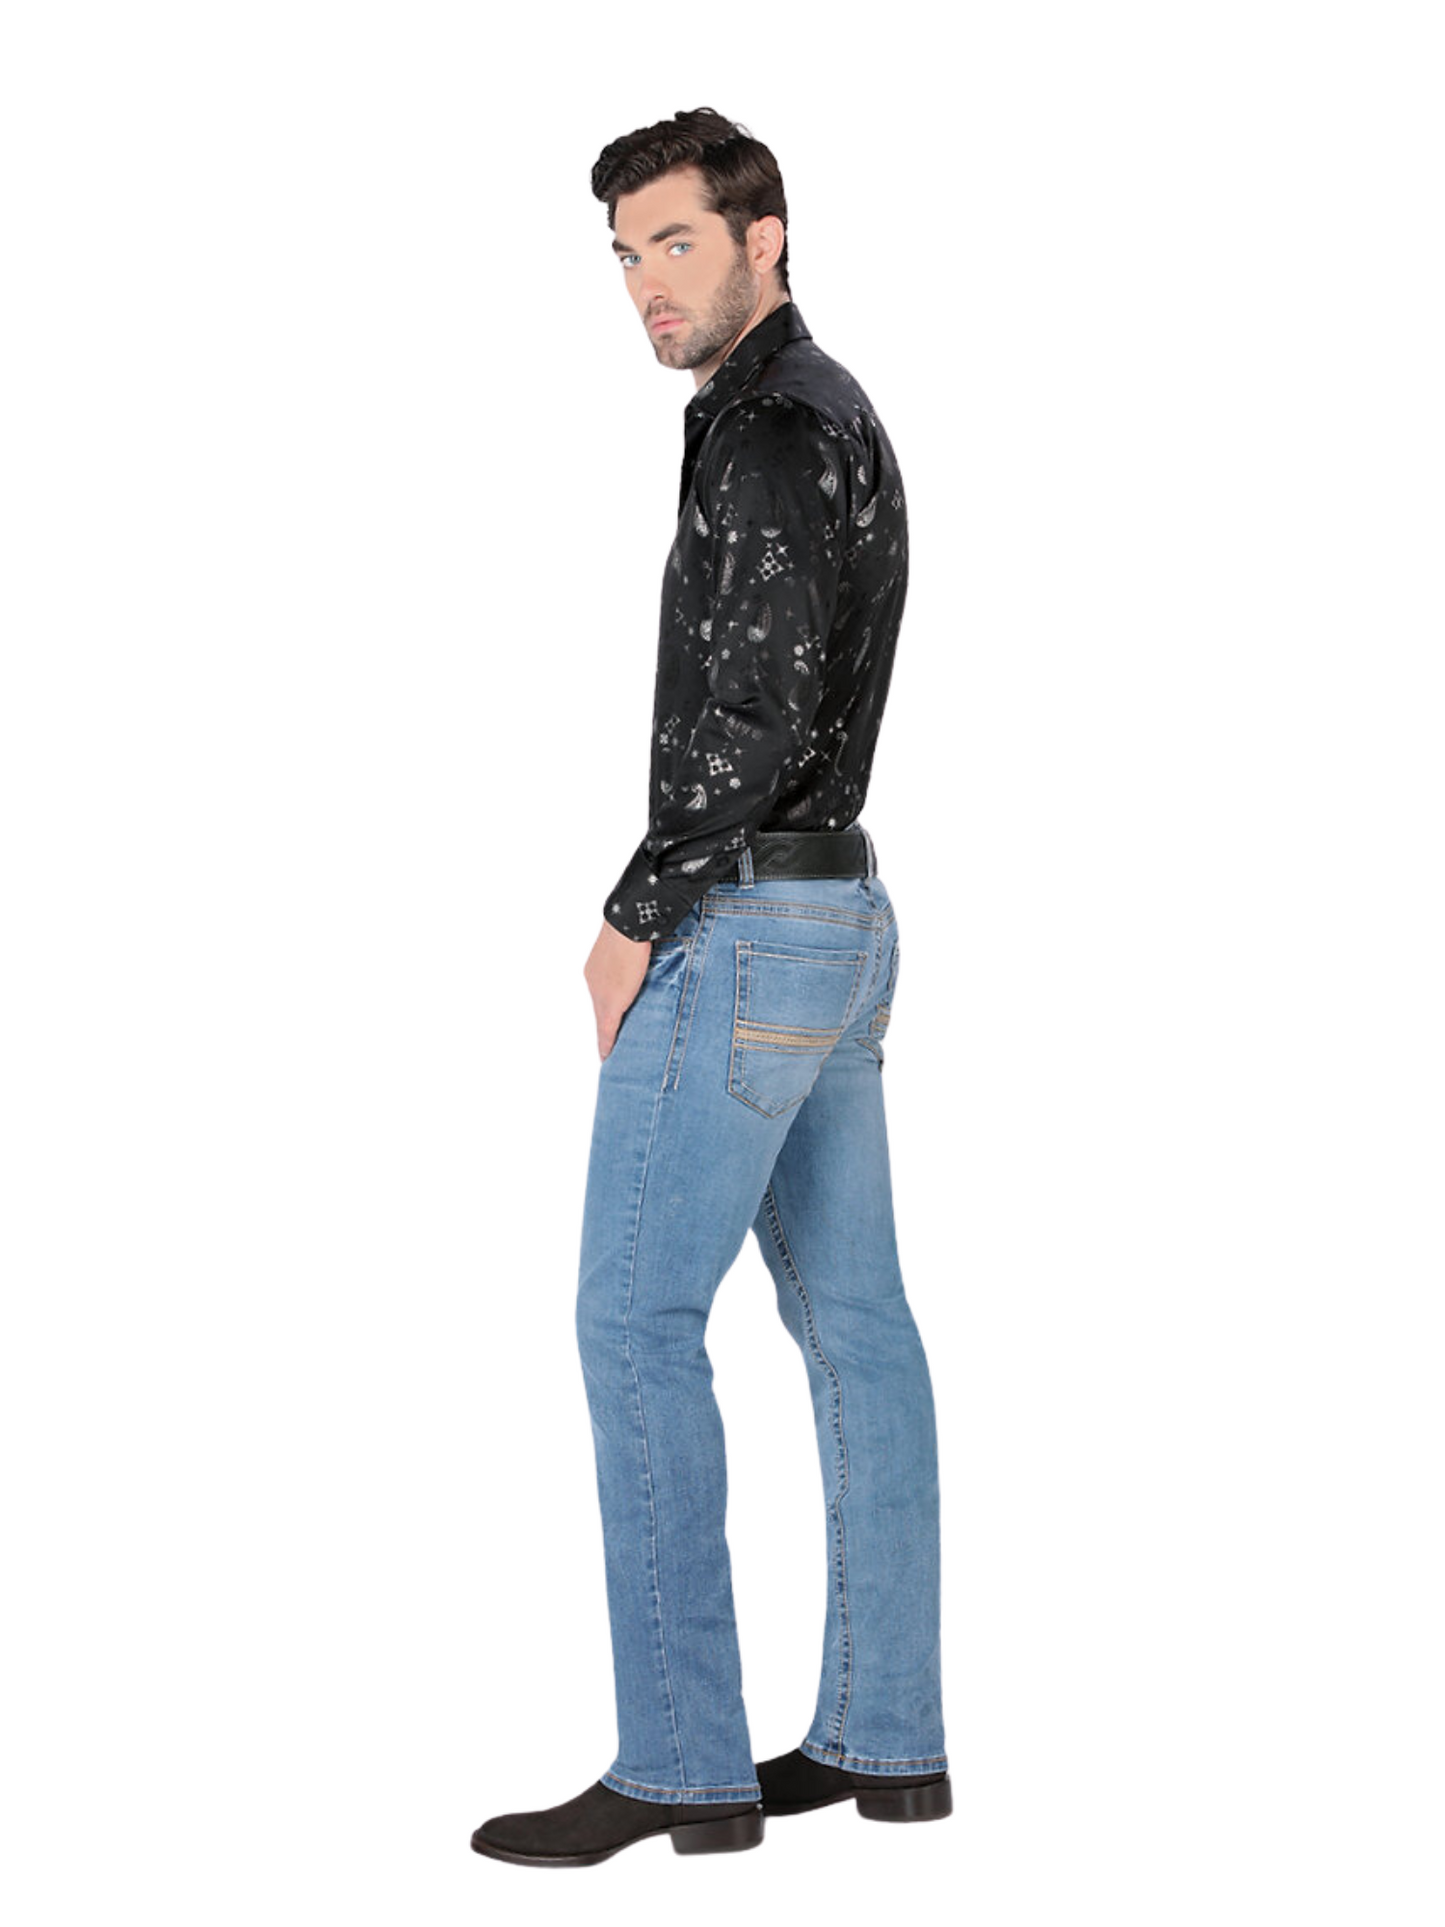 Stretch Denim Jeans for Men 'Montero' - ID: 4603 Denim Jeans Montero